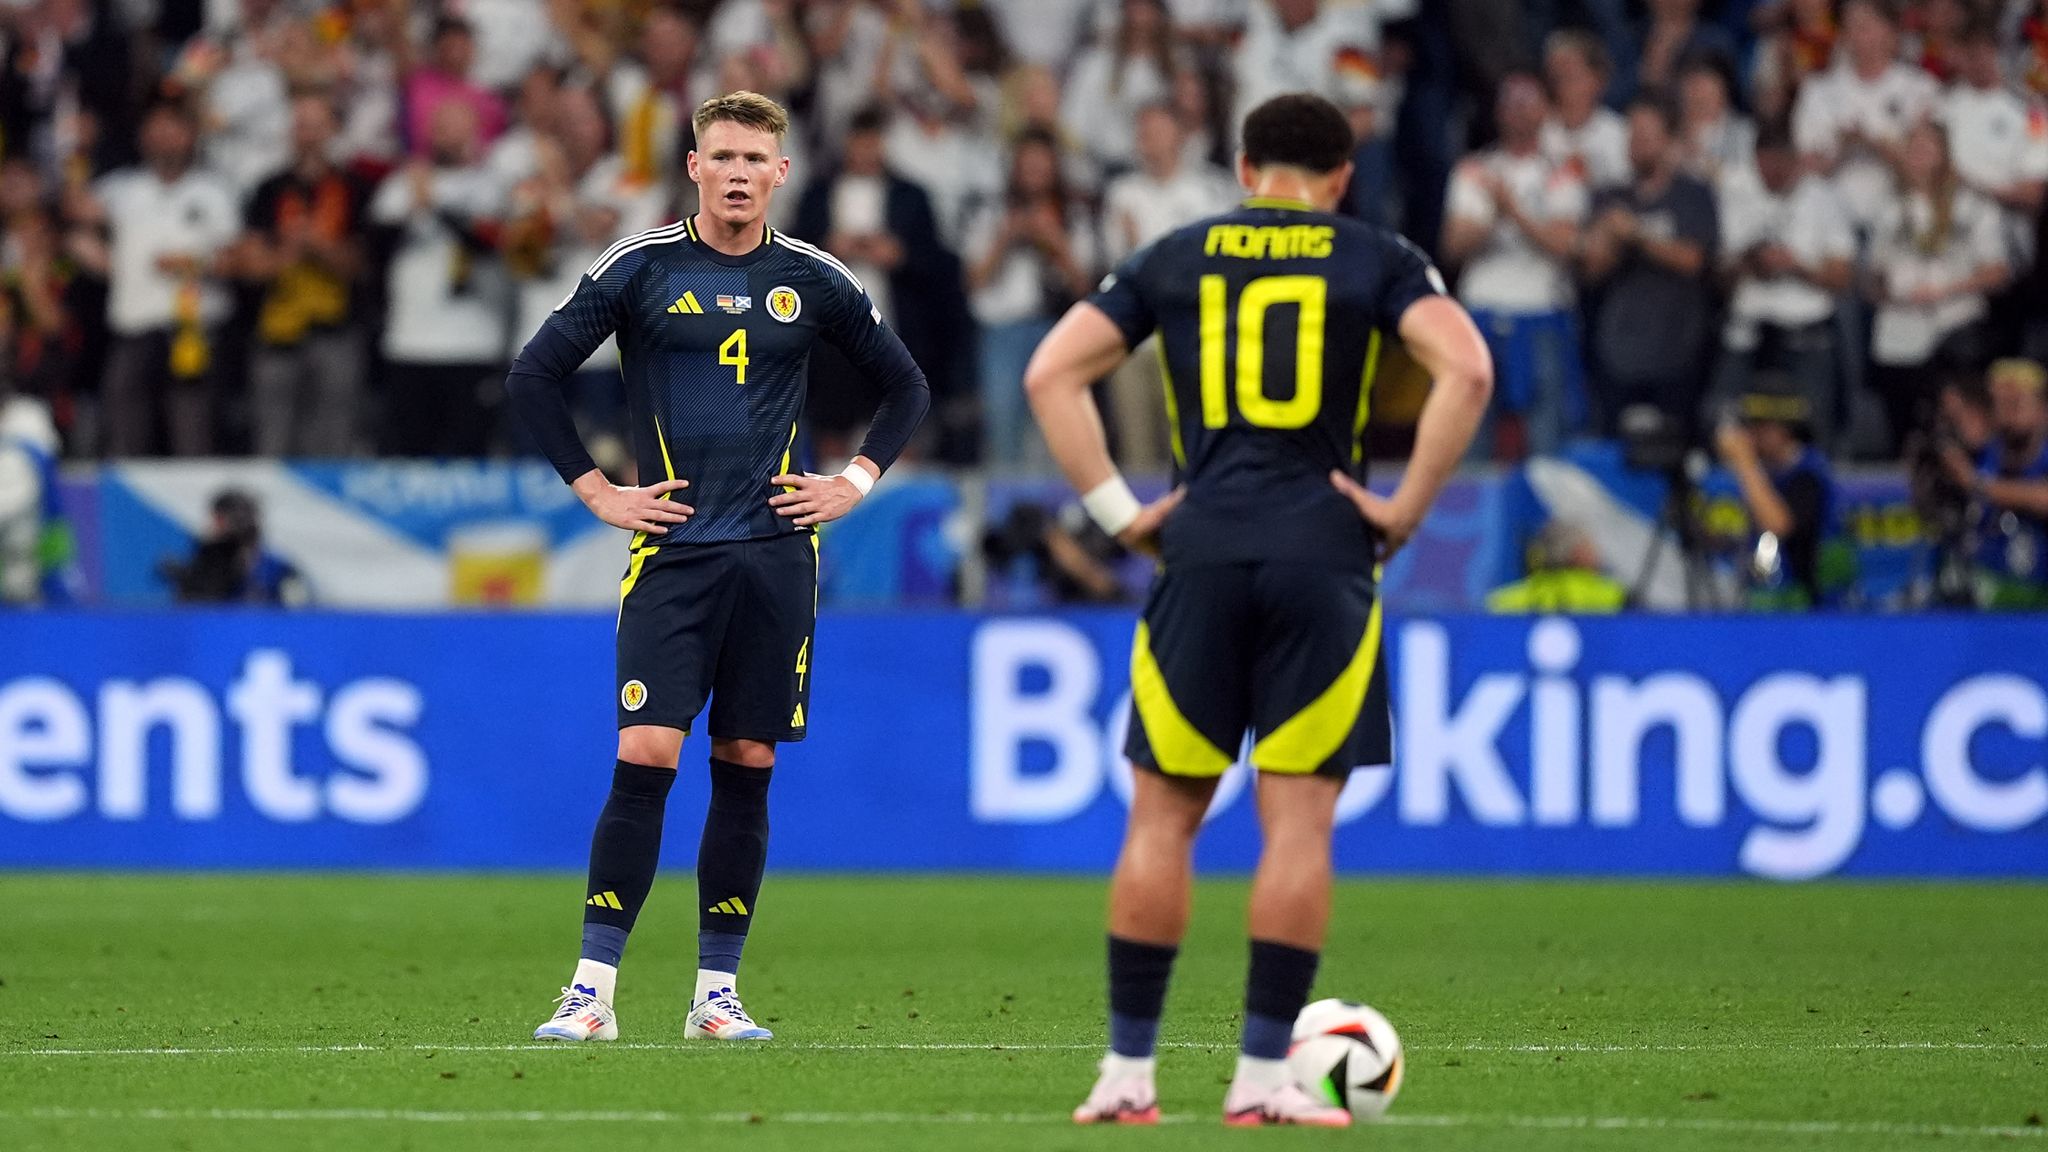 Germany 5 - 1 Scotland - Match Report & Highlights